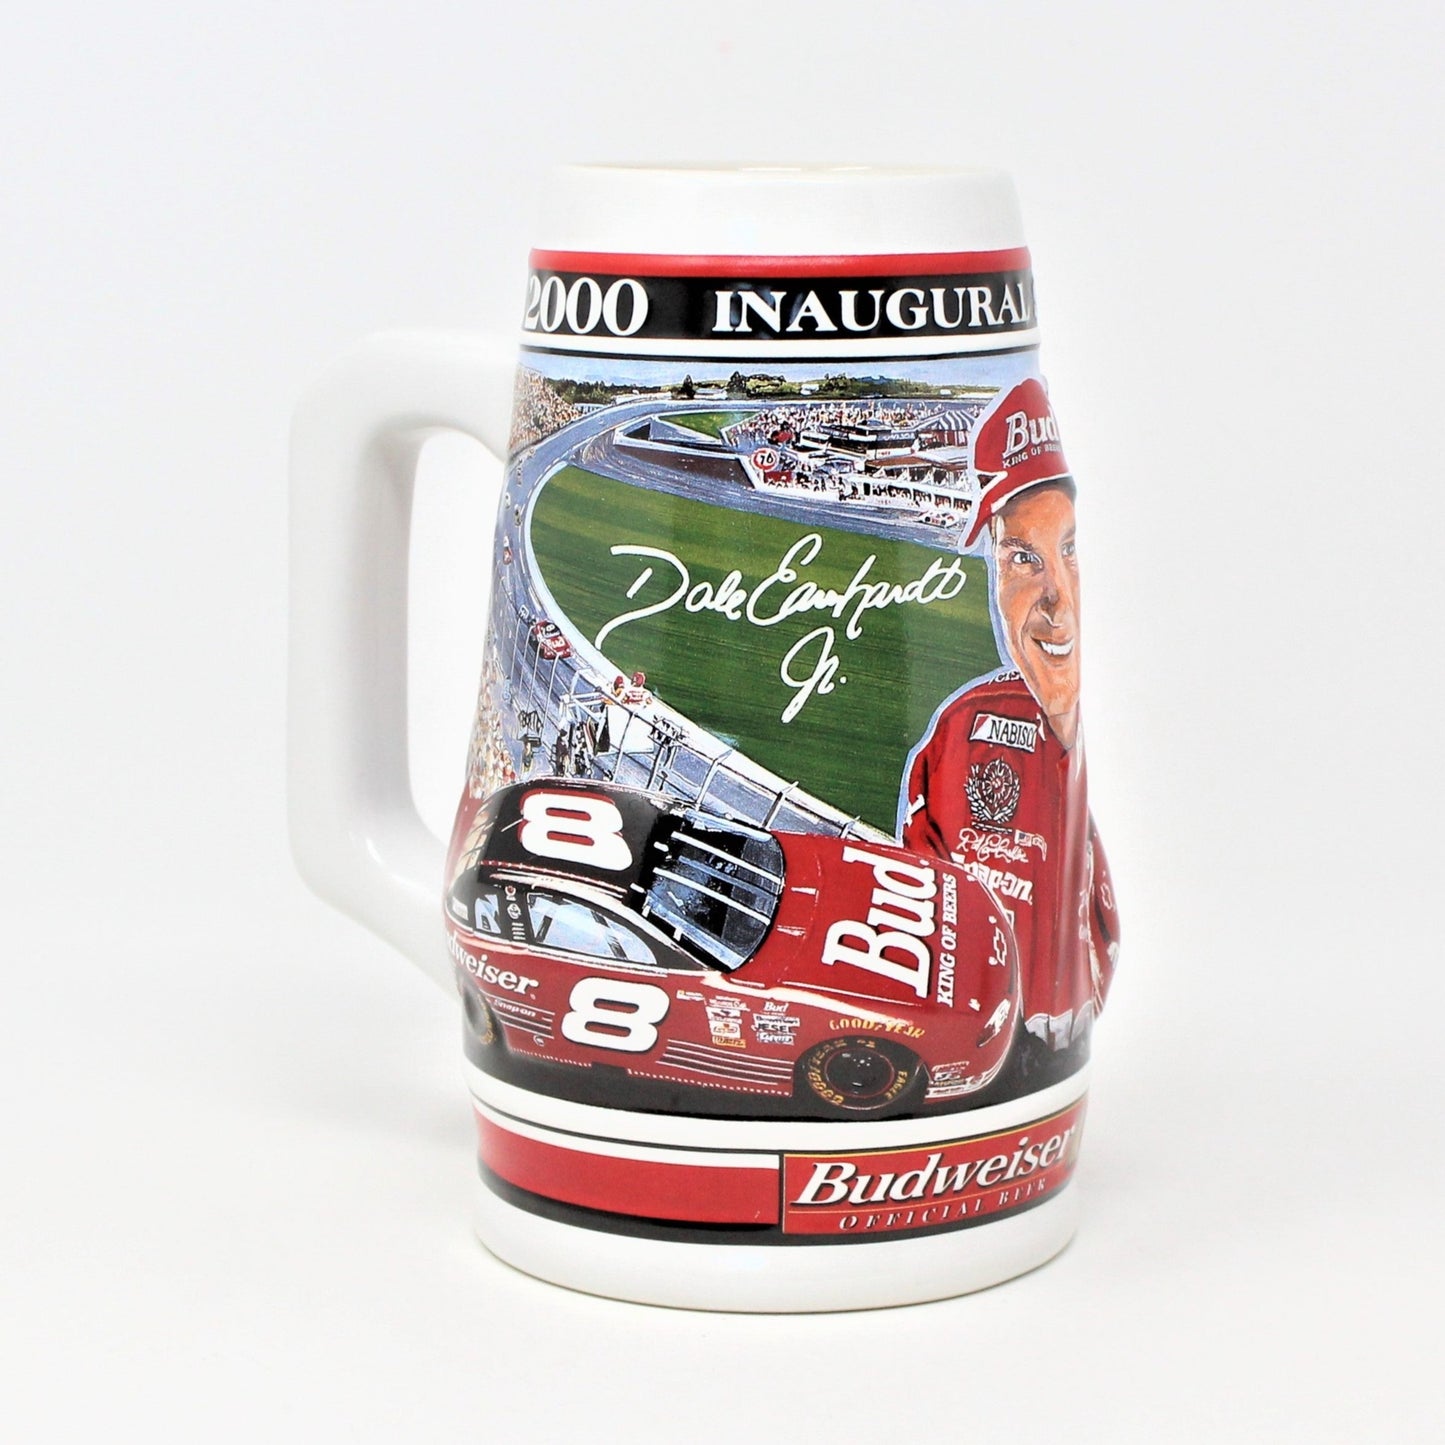 Beer Stein, Budweiser, Nascar Dale Earnhardt Jr 2000 Inaugural Season Collectible